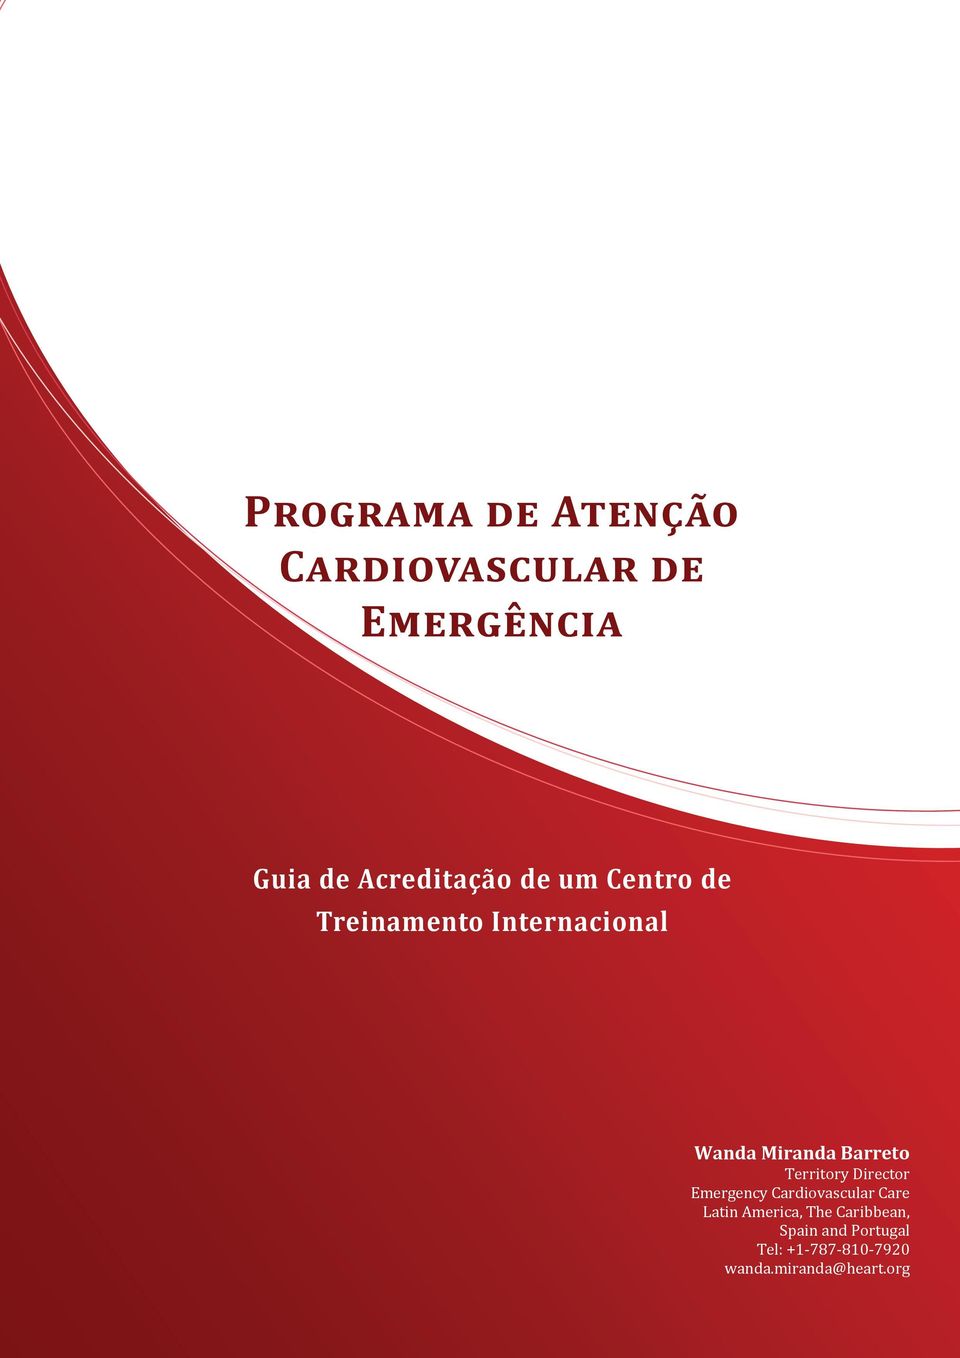 Emergency Cardiovascular Care Latin America, The